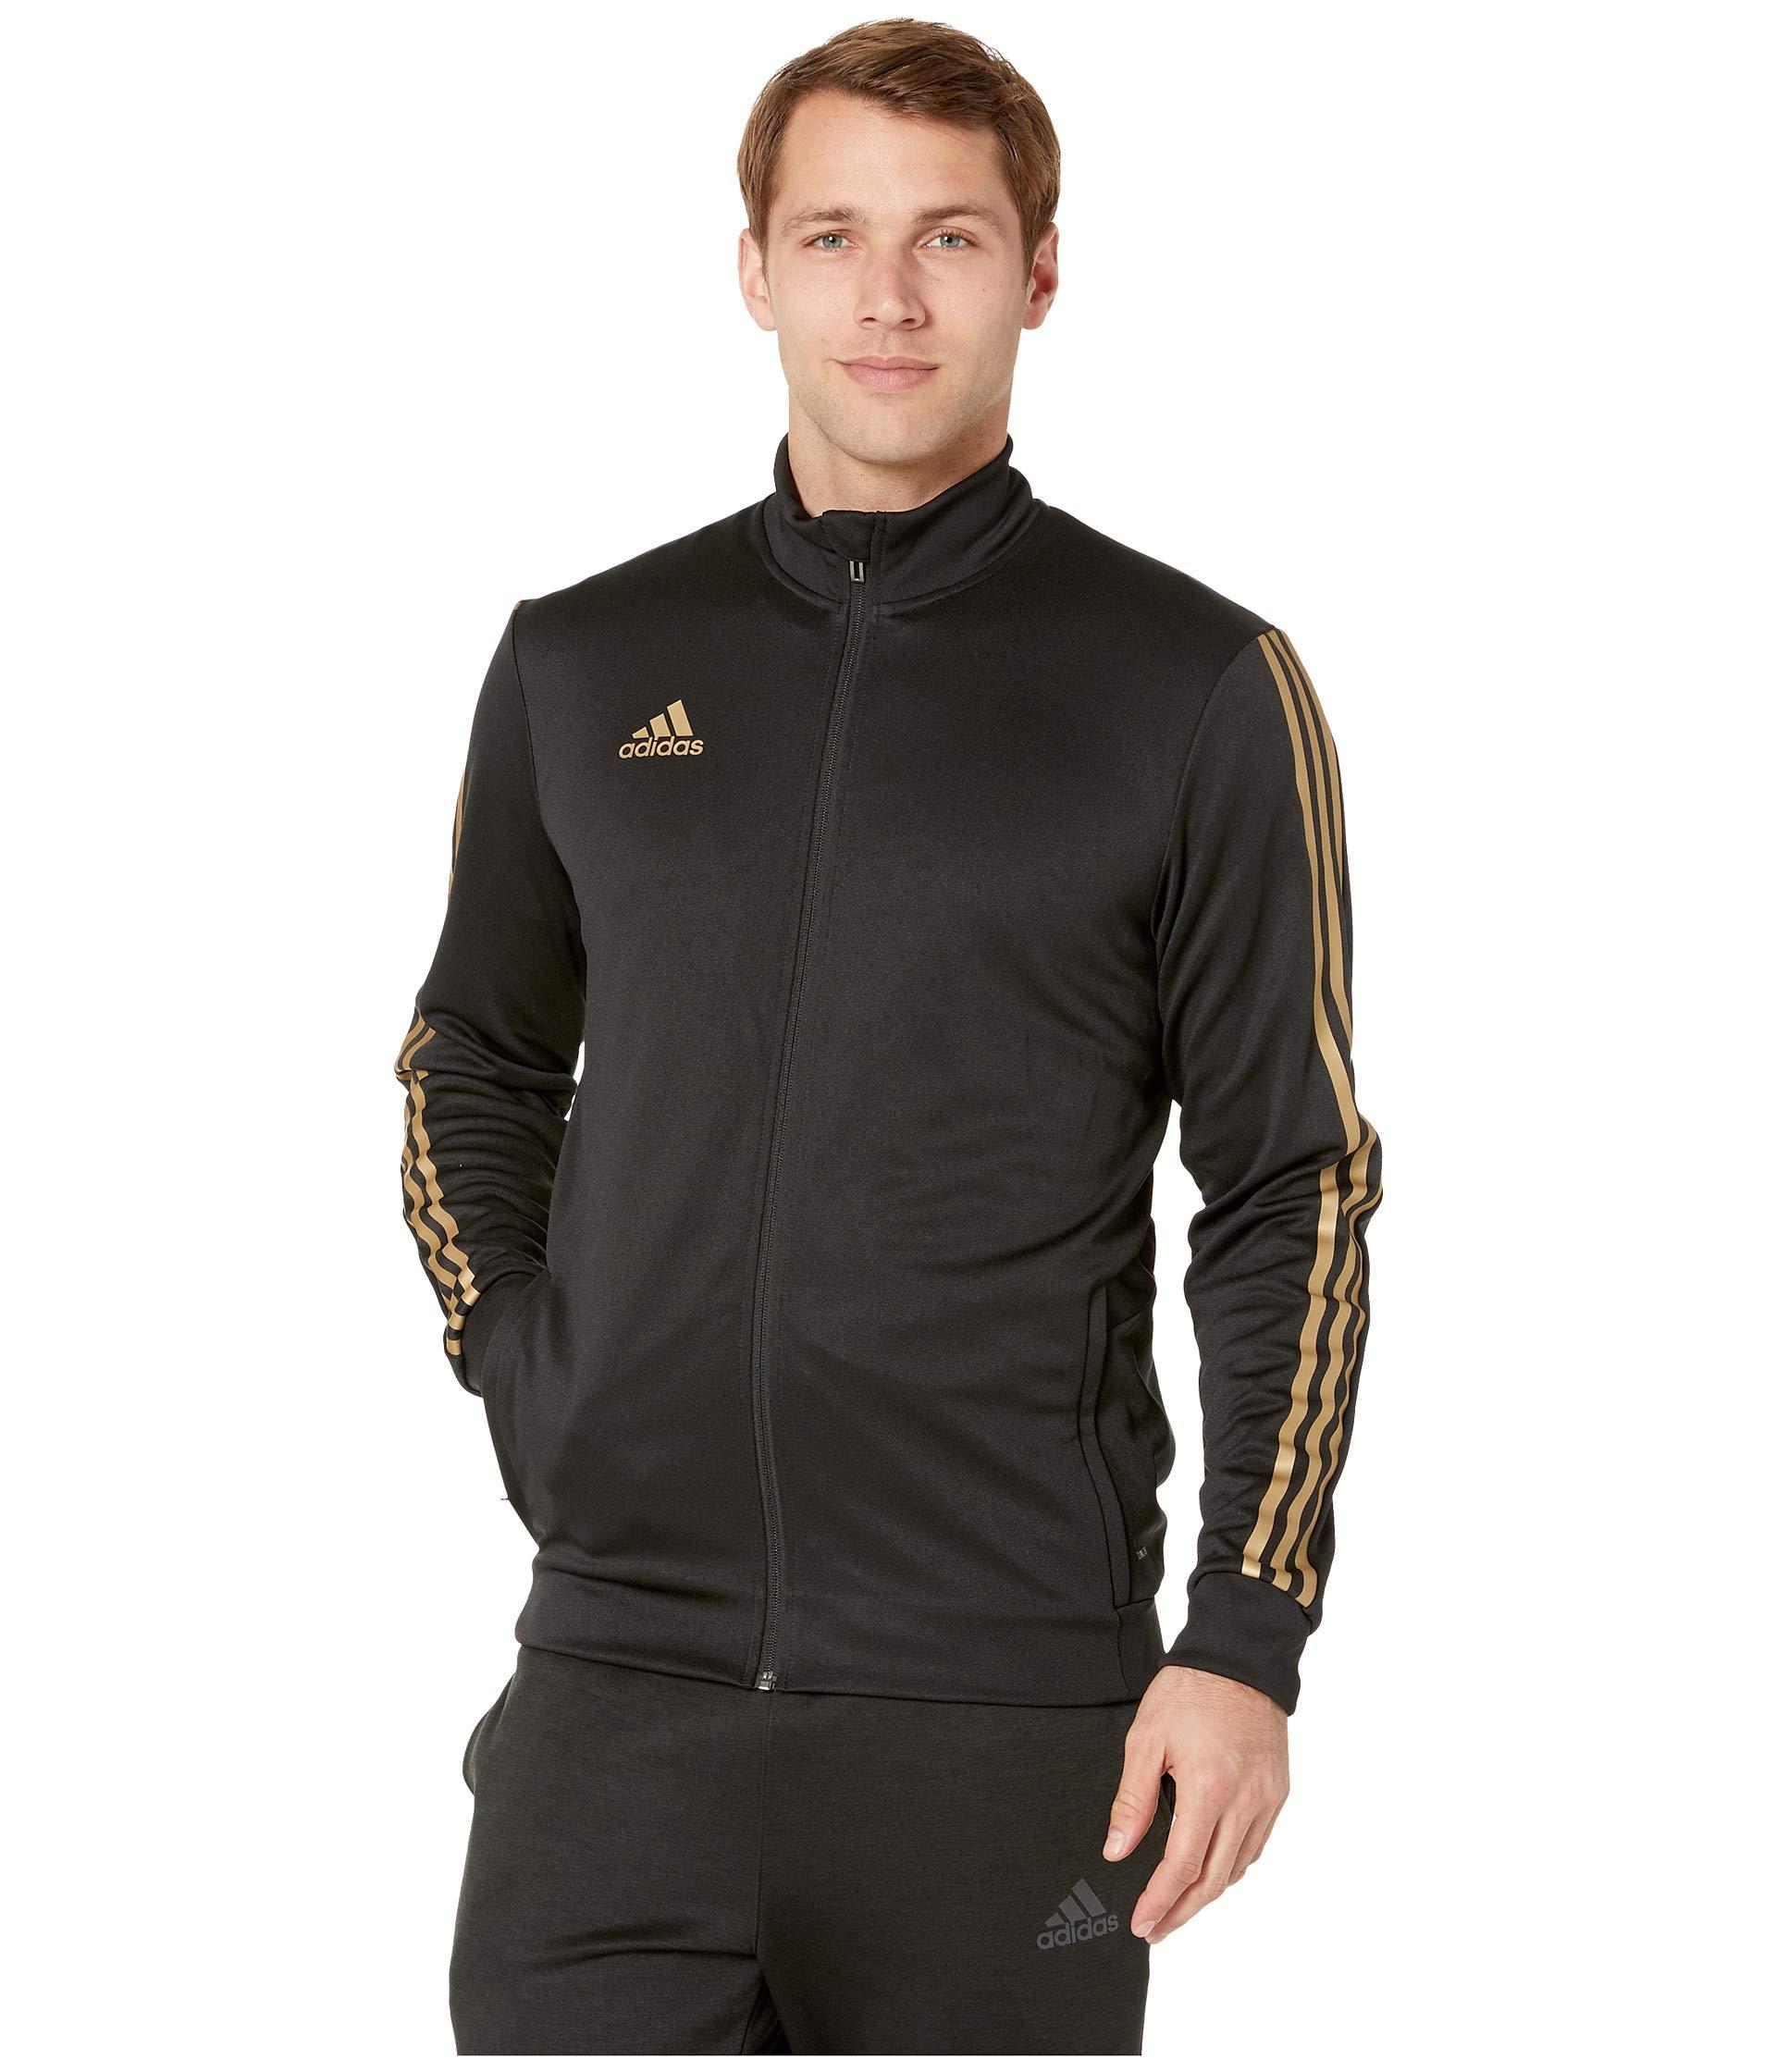 adidas black and gold track jacket